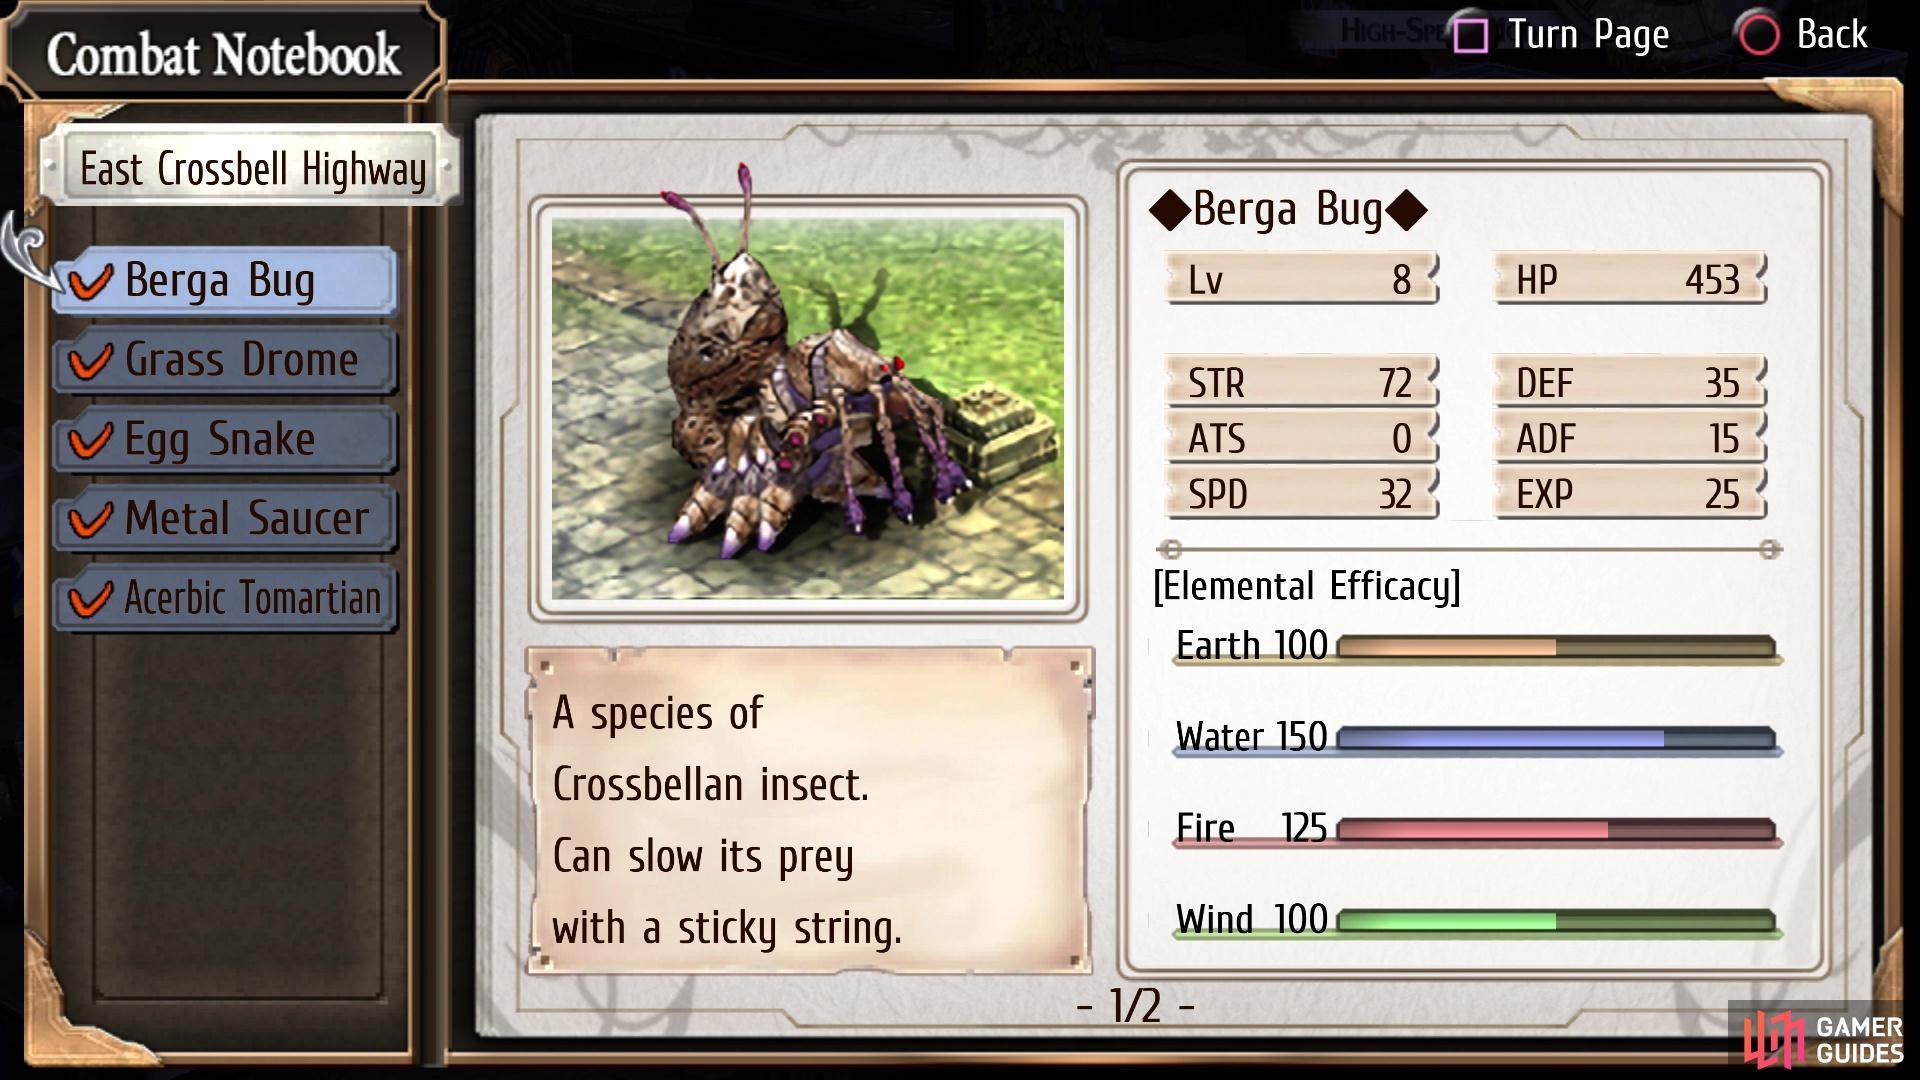 The Berga Bug enemy